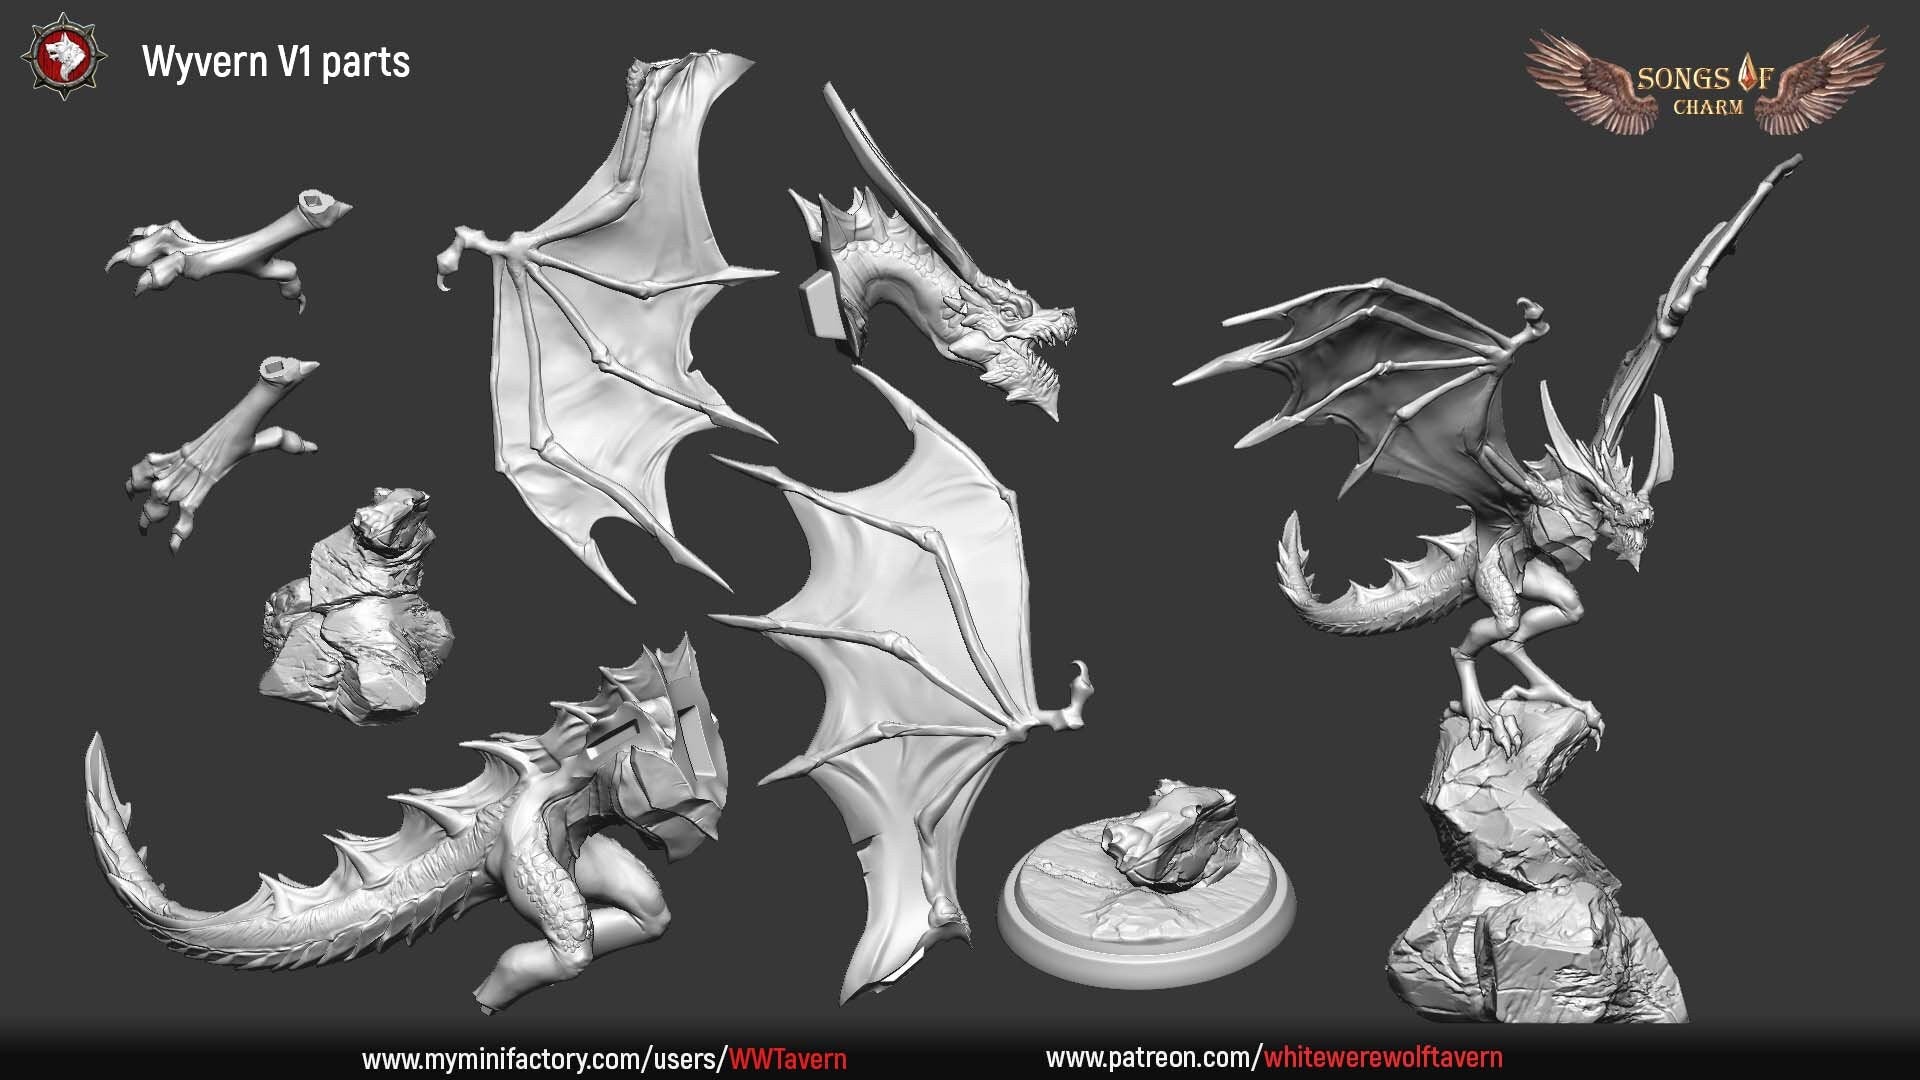 Wyverns | Songs Of Charm | Resin 3D Printed Miniature | White Werewolf Tavern | RPG | D&D | DnD